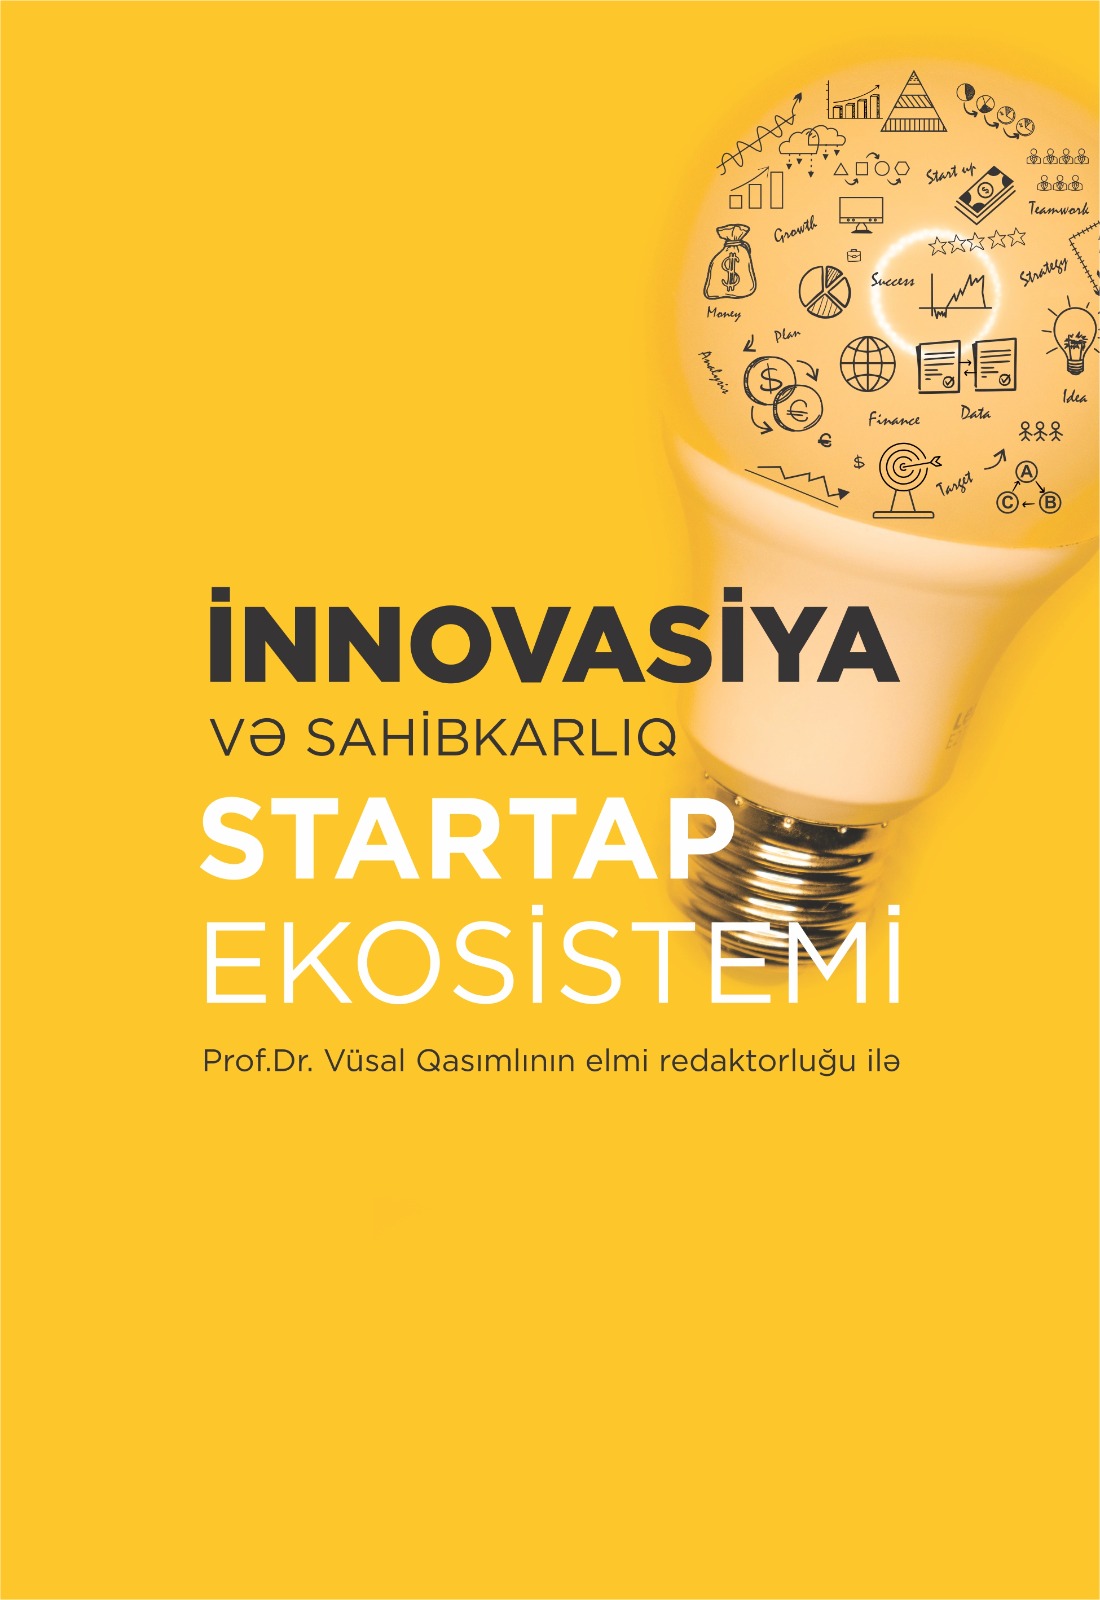 Innovation and entrepreneurship: The startup ecosystem